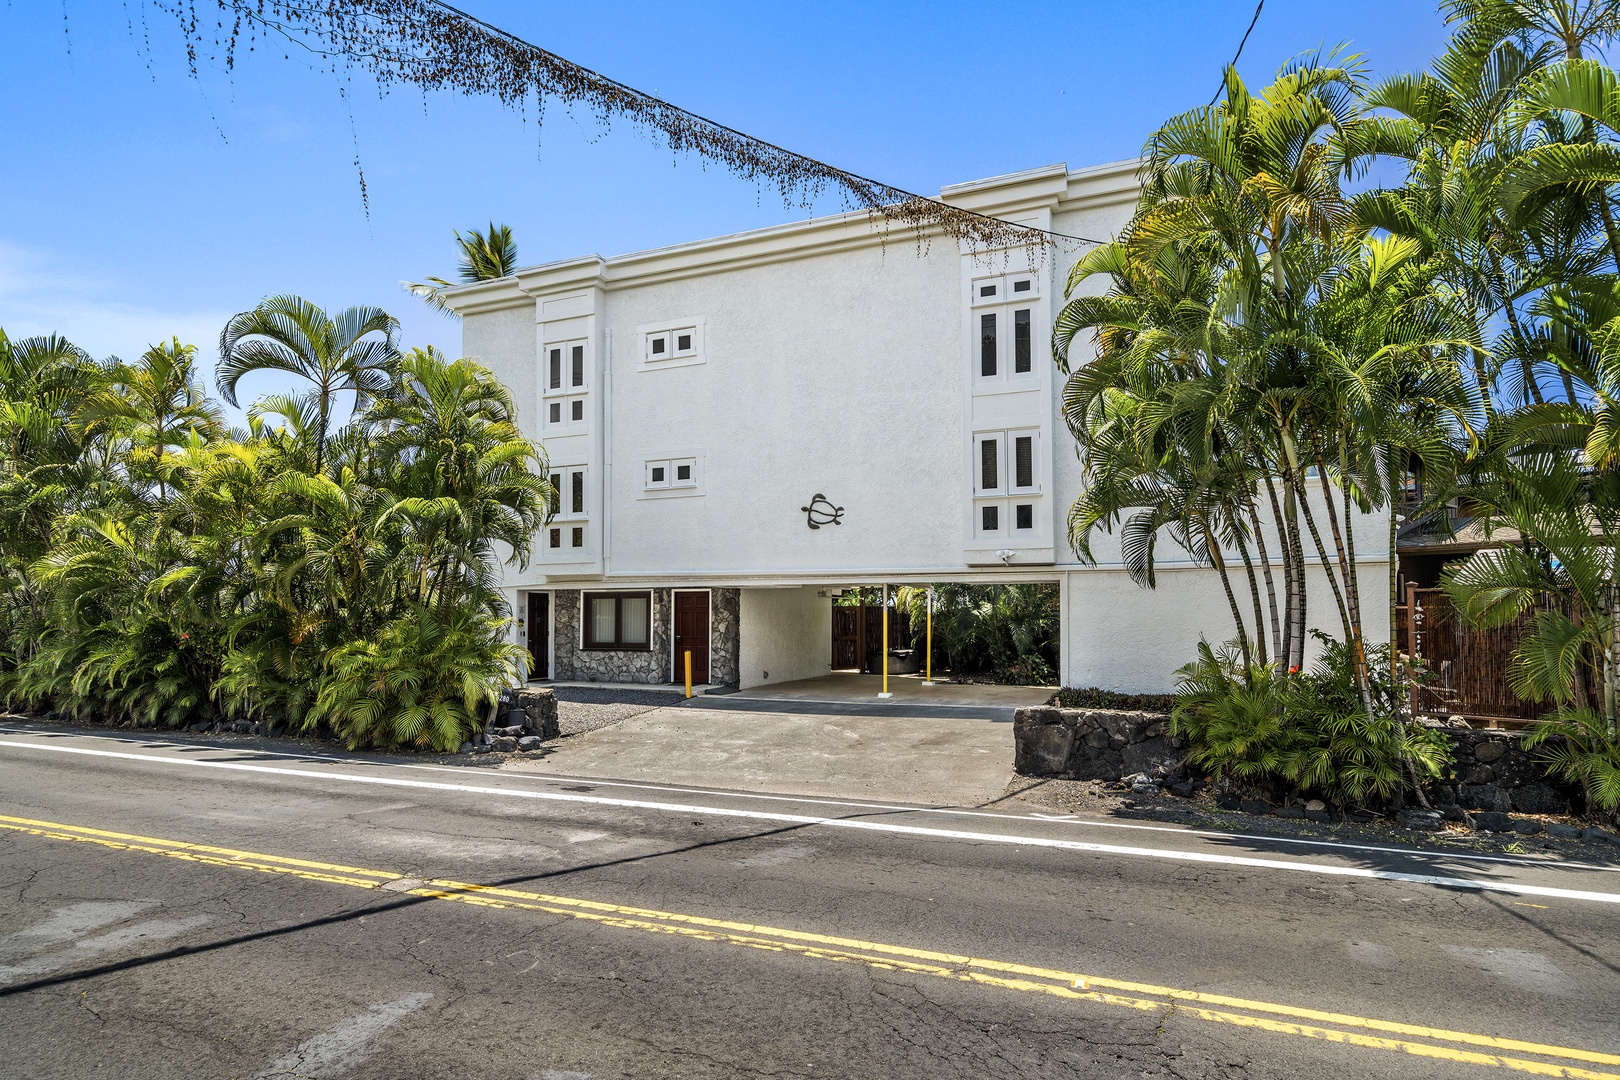 Kailua Kona Vacation Rentals, Kona's Shangri La - Exterior and parking areas at Kona's Shangri La